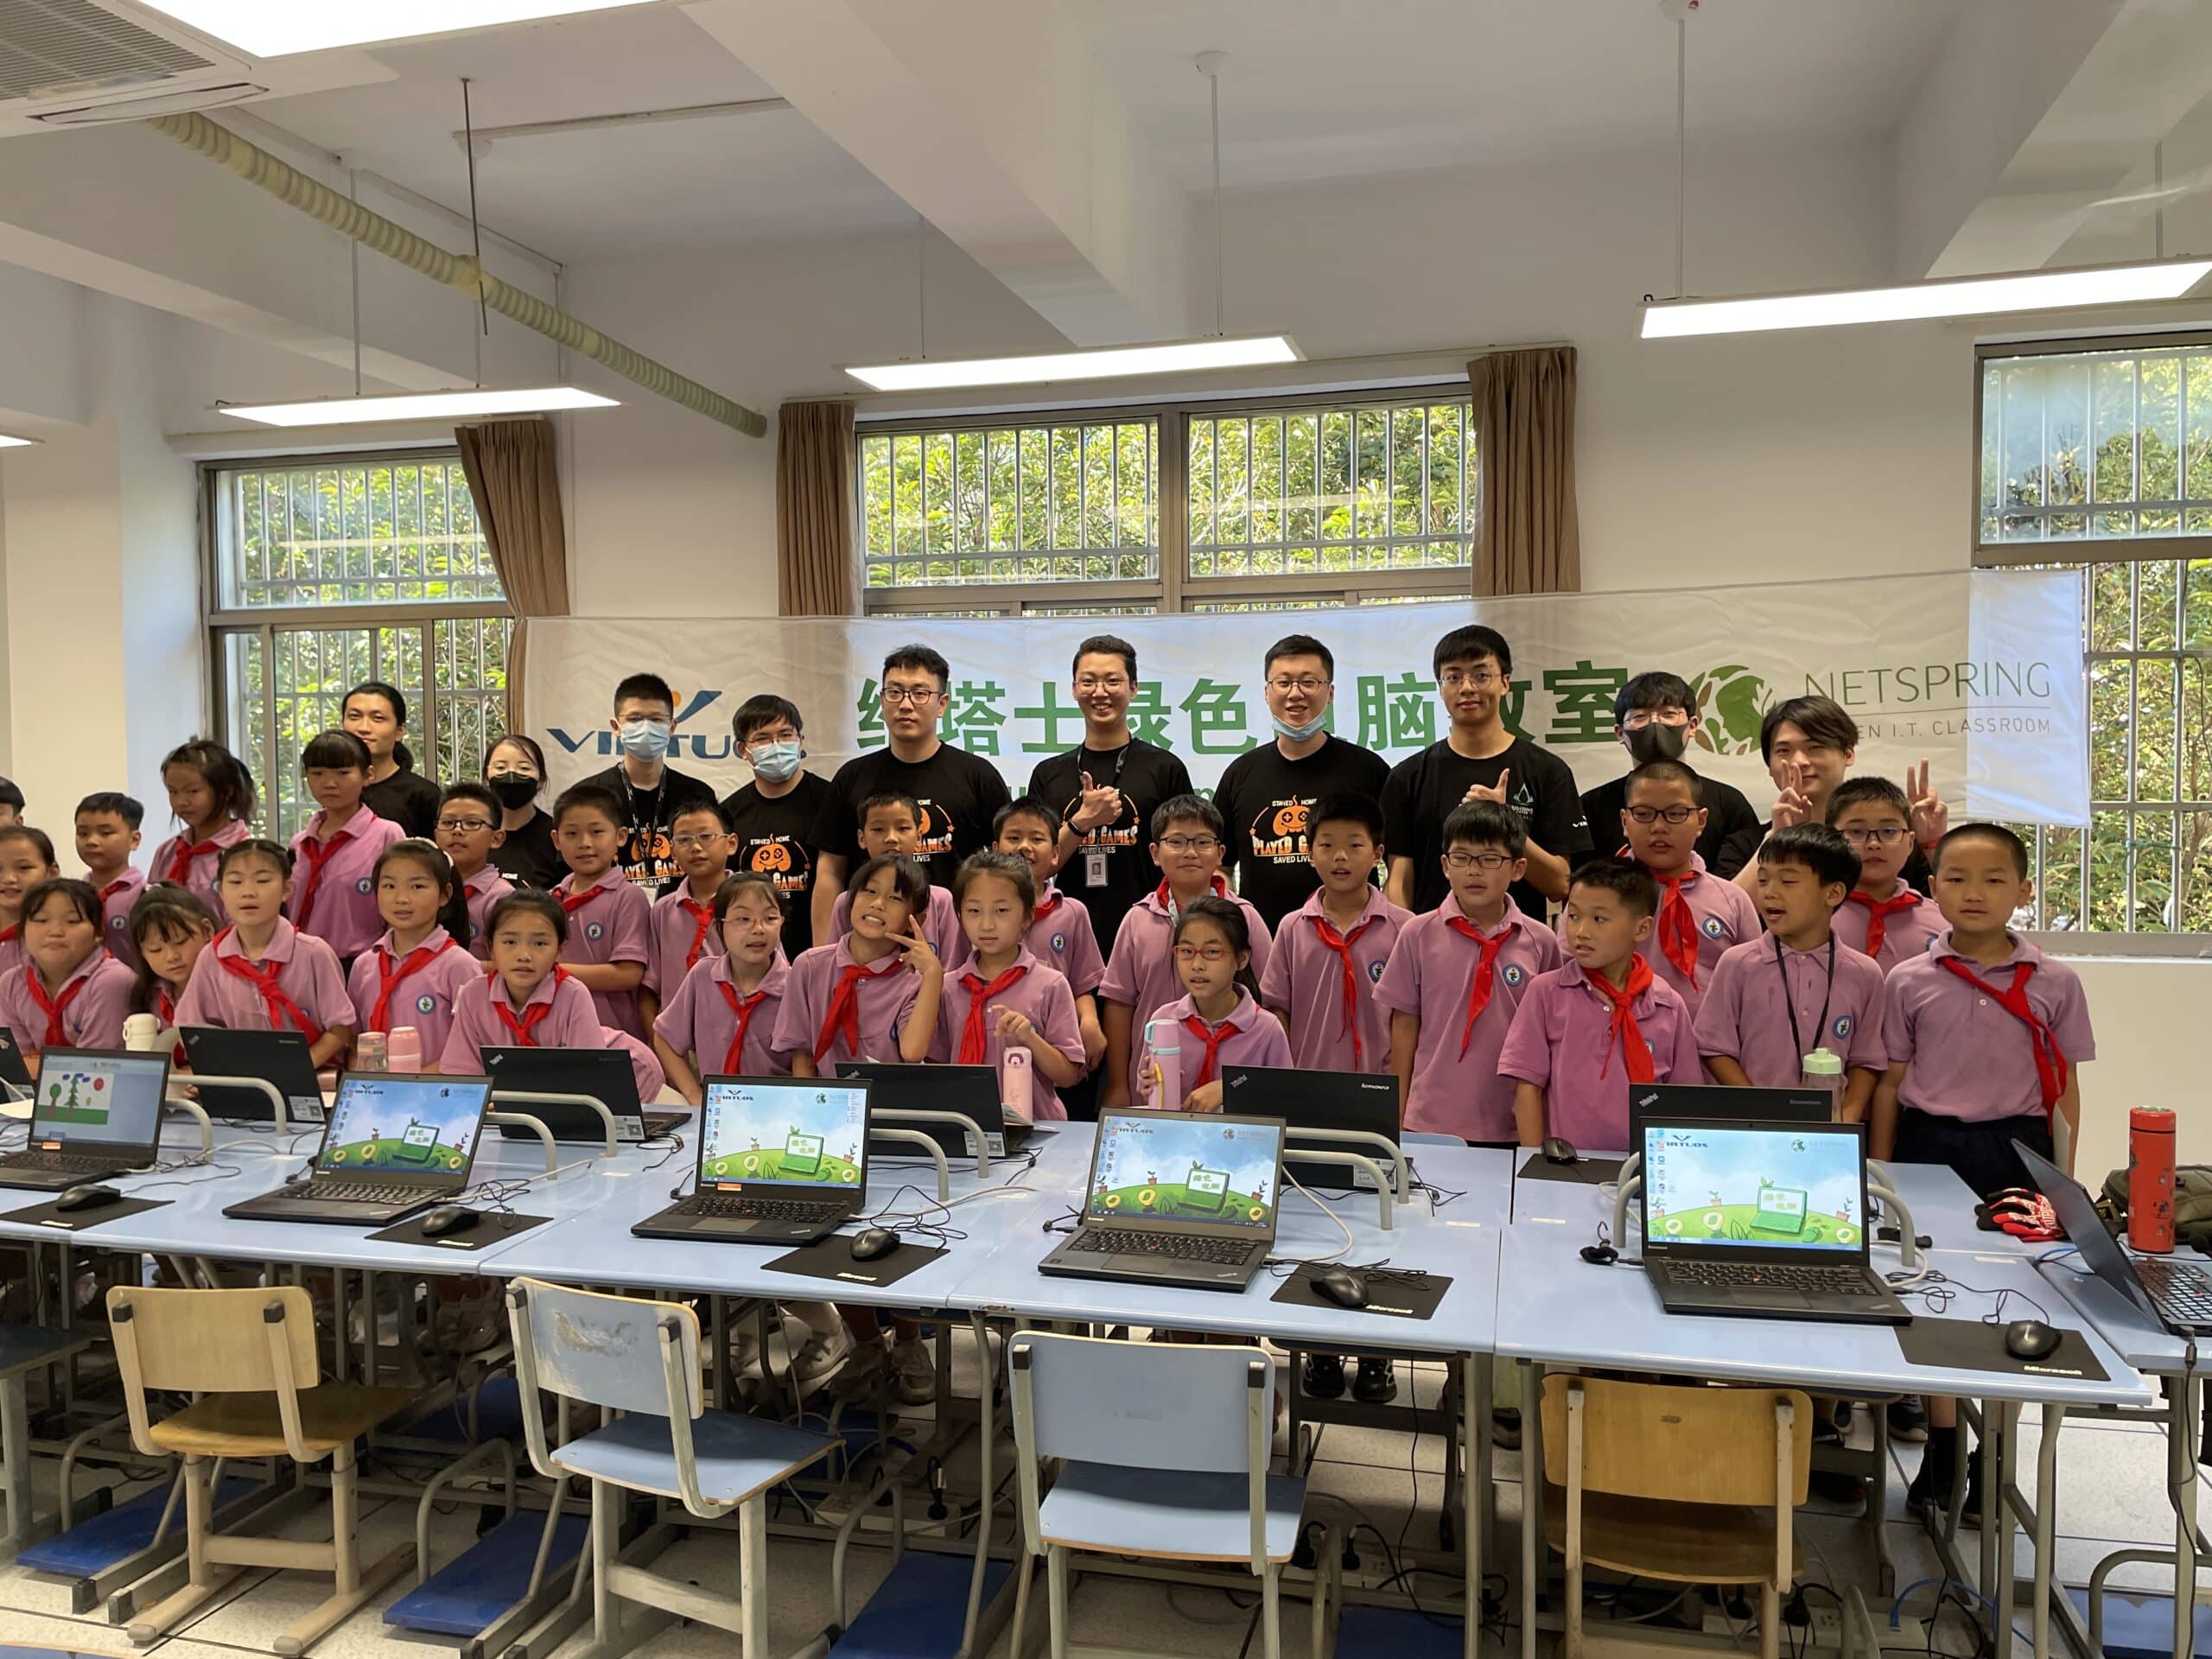 Green IT Classroom: Virtuos Shanghai Raises Awareness About Environmental Sustainability Among Local Students Through Art